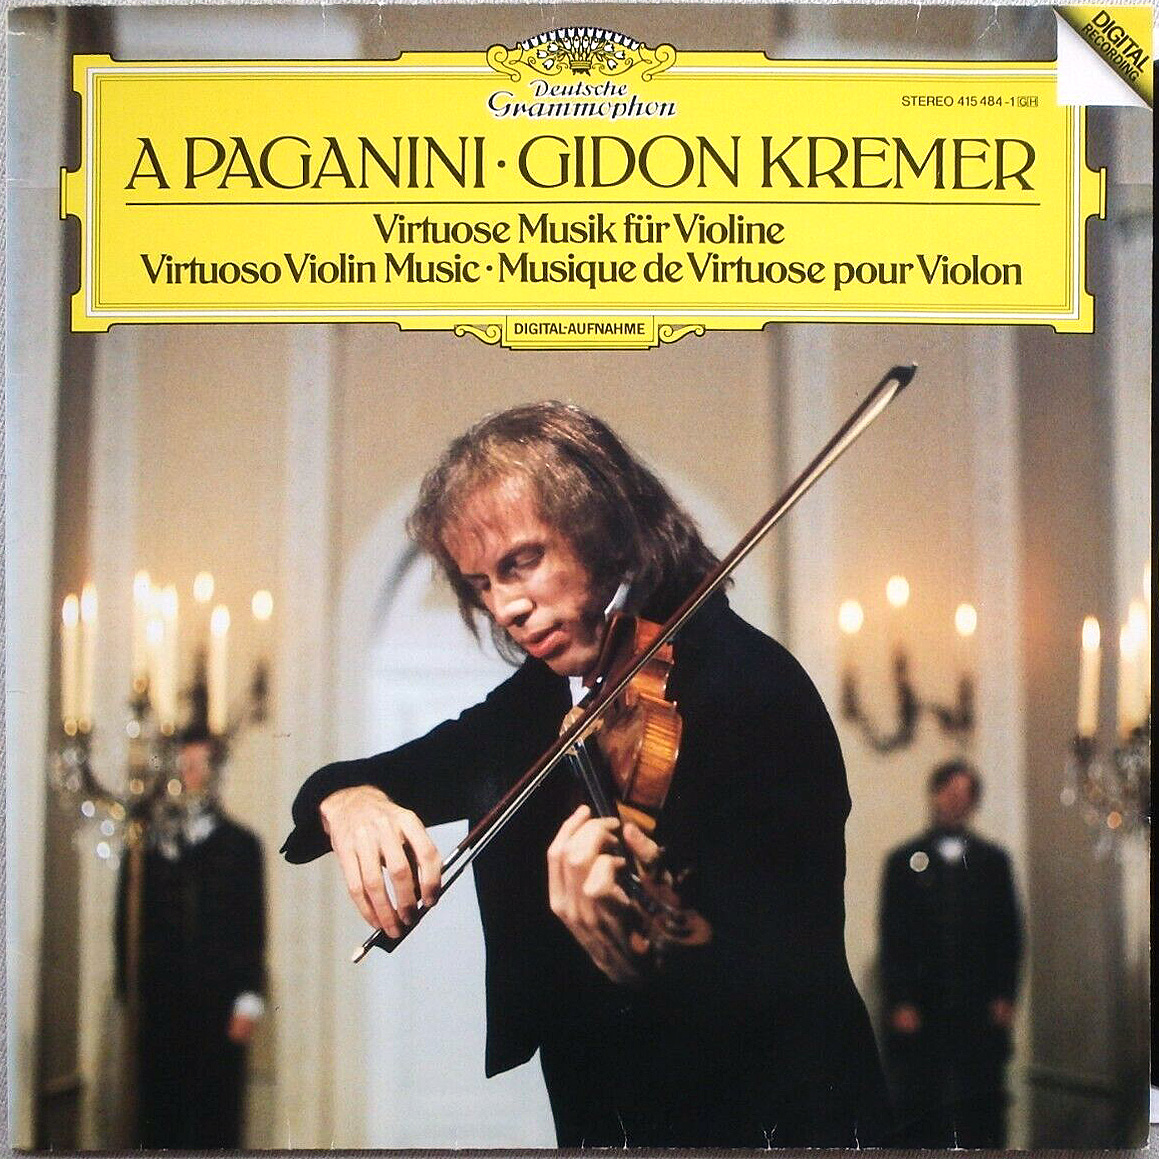 DGG 415 484 Paganini Virtuoso Violin Music Kremer DGG Digital Aufnahme